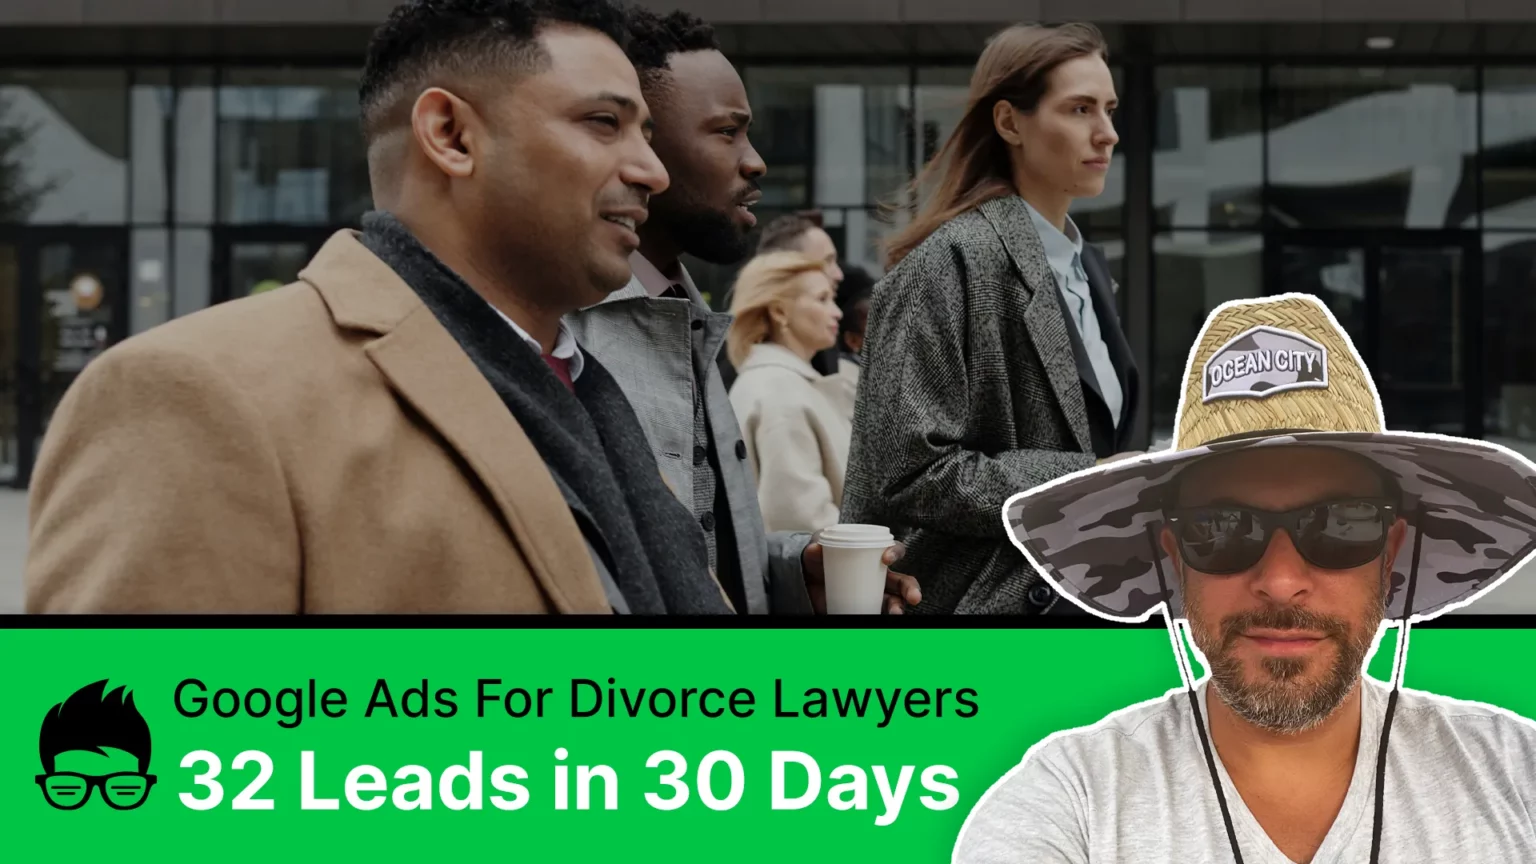 Divorce Lawyer Google Ads - Lead Generation